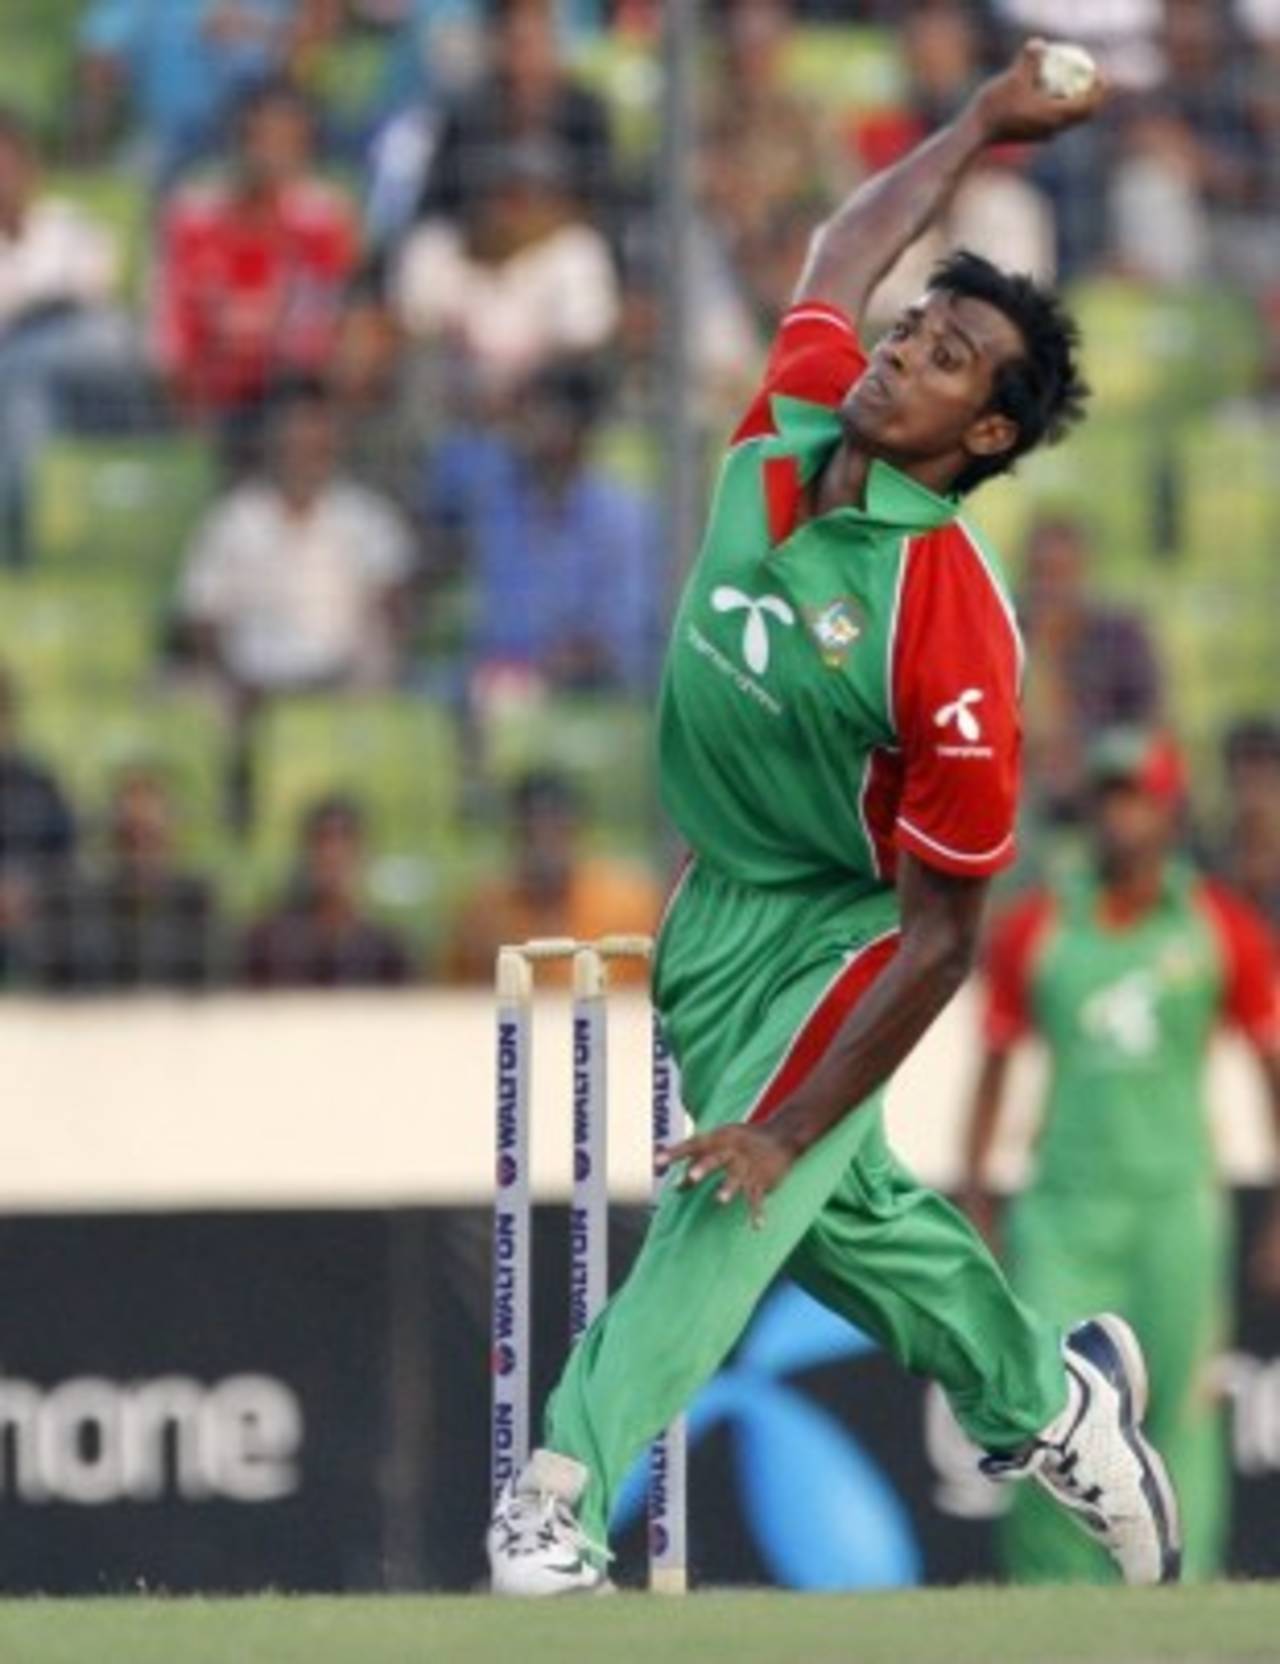 Rubel Hossain bowls during the first ODI, Bangladesh v West Indies, 1st ODI, Mirpur, October 13, 2011